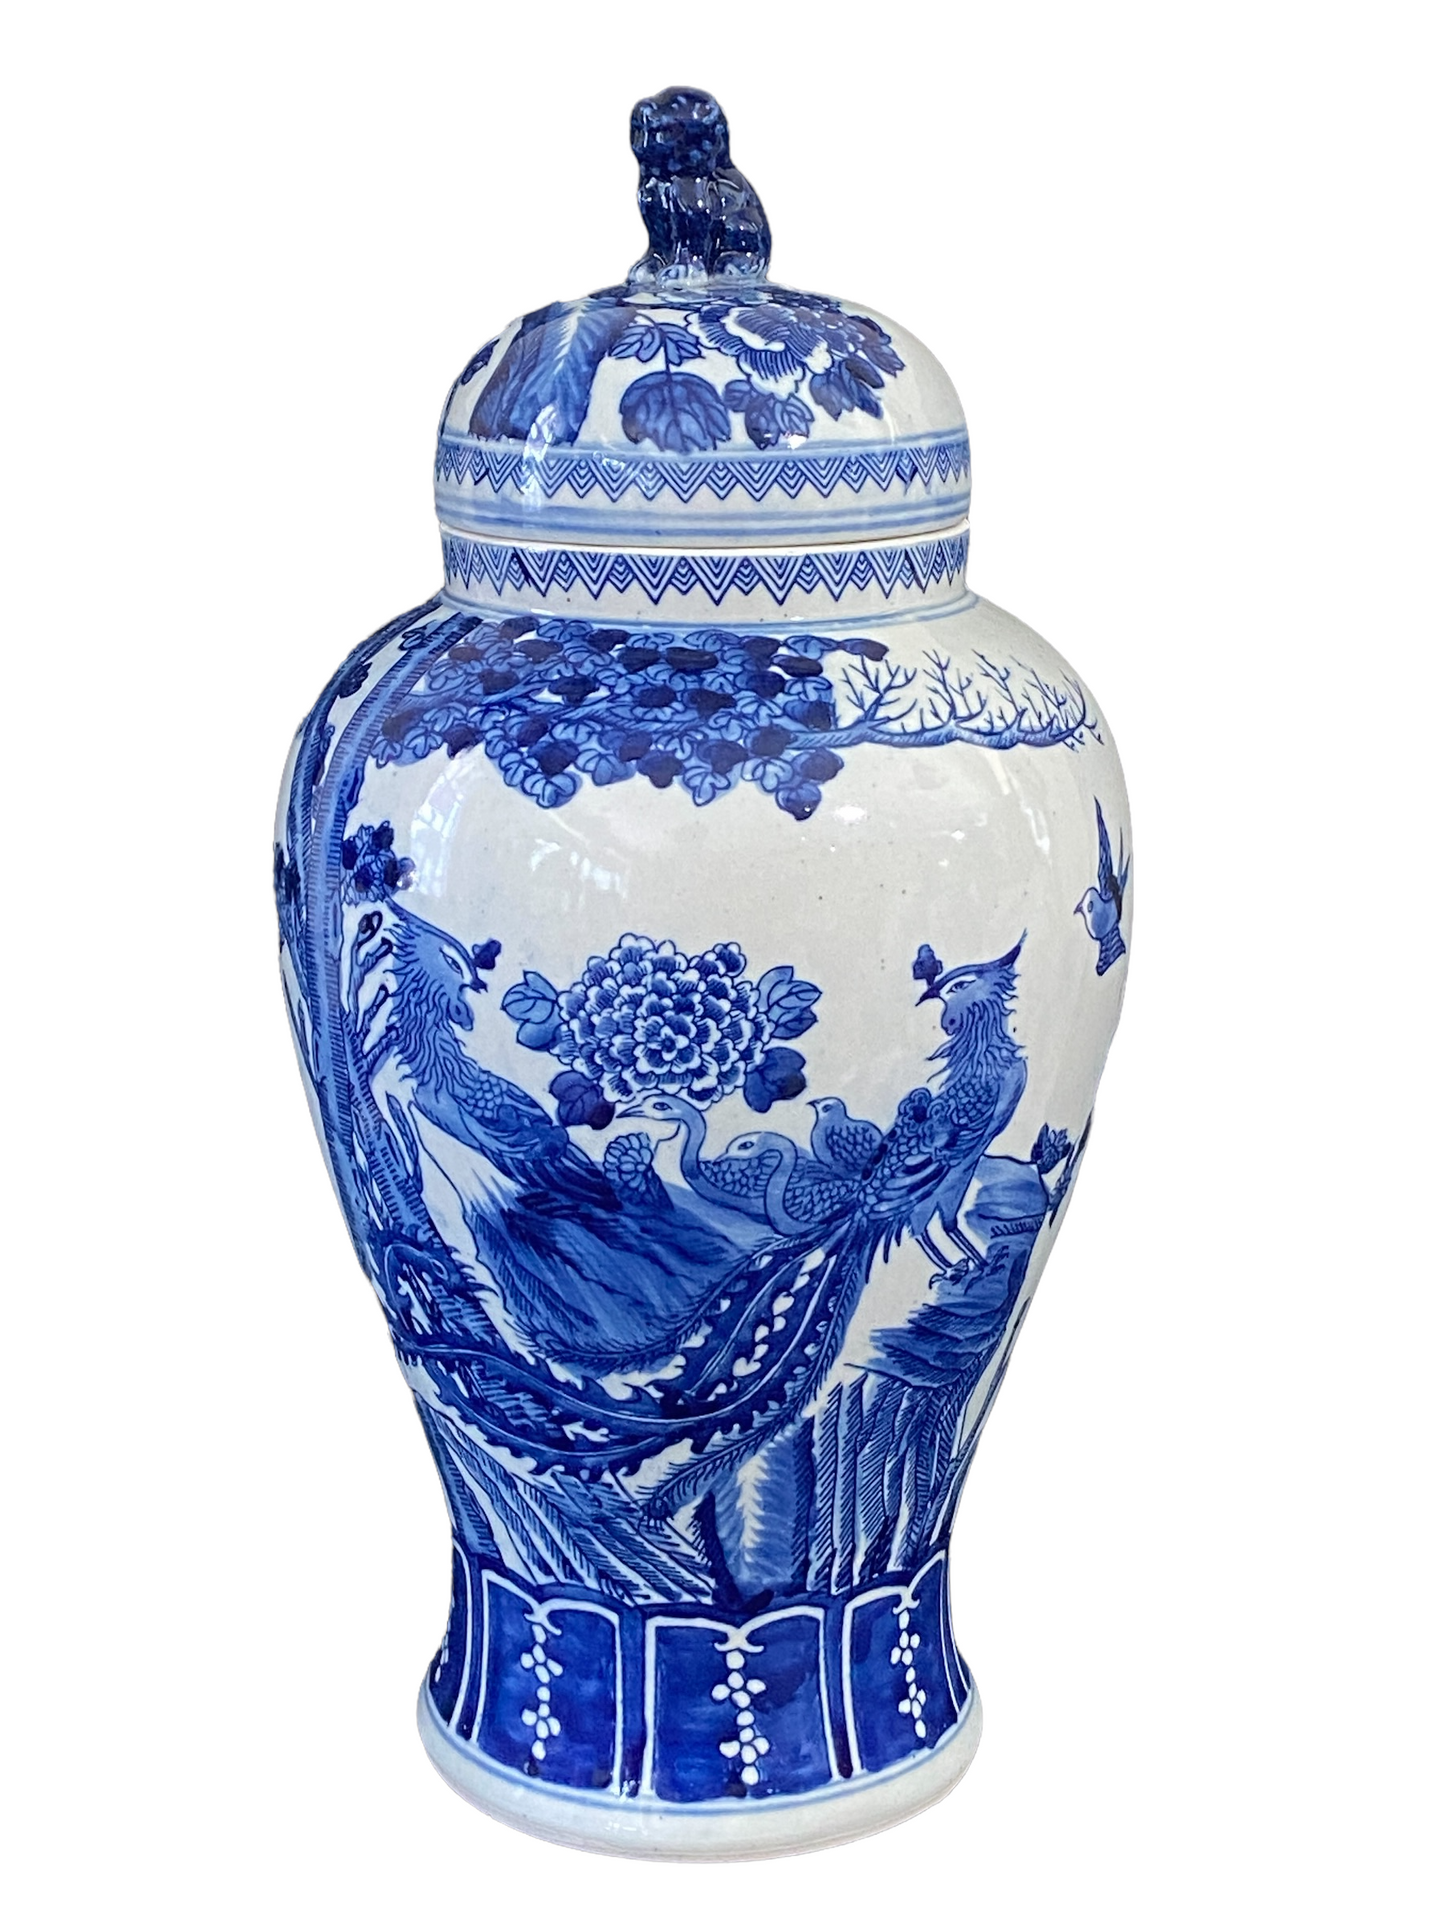 #3692 Chinoiserie Blue and White Porcelain Ginger Jar